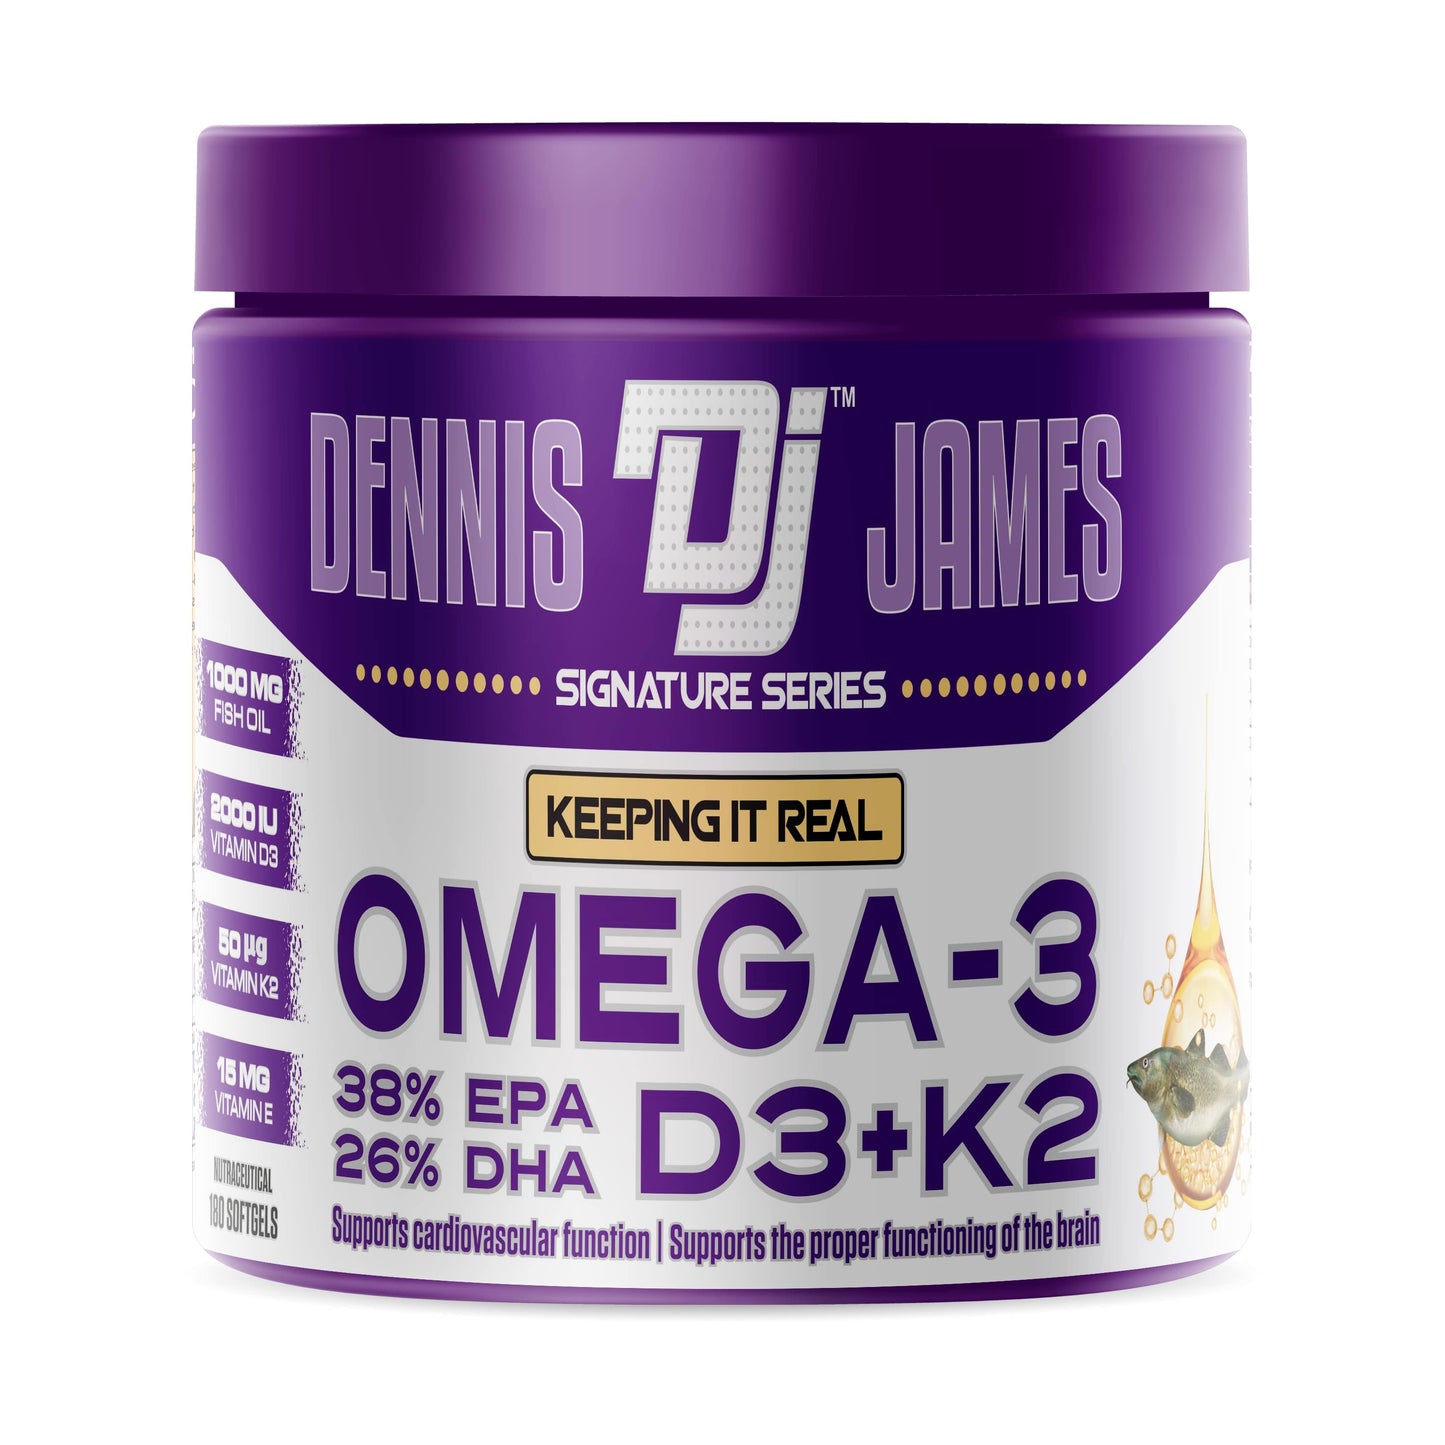 Dennis James Signature Series Omega-3 Fish Oil 180 Softgels